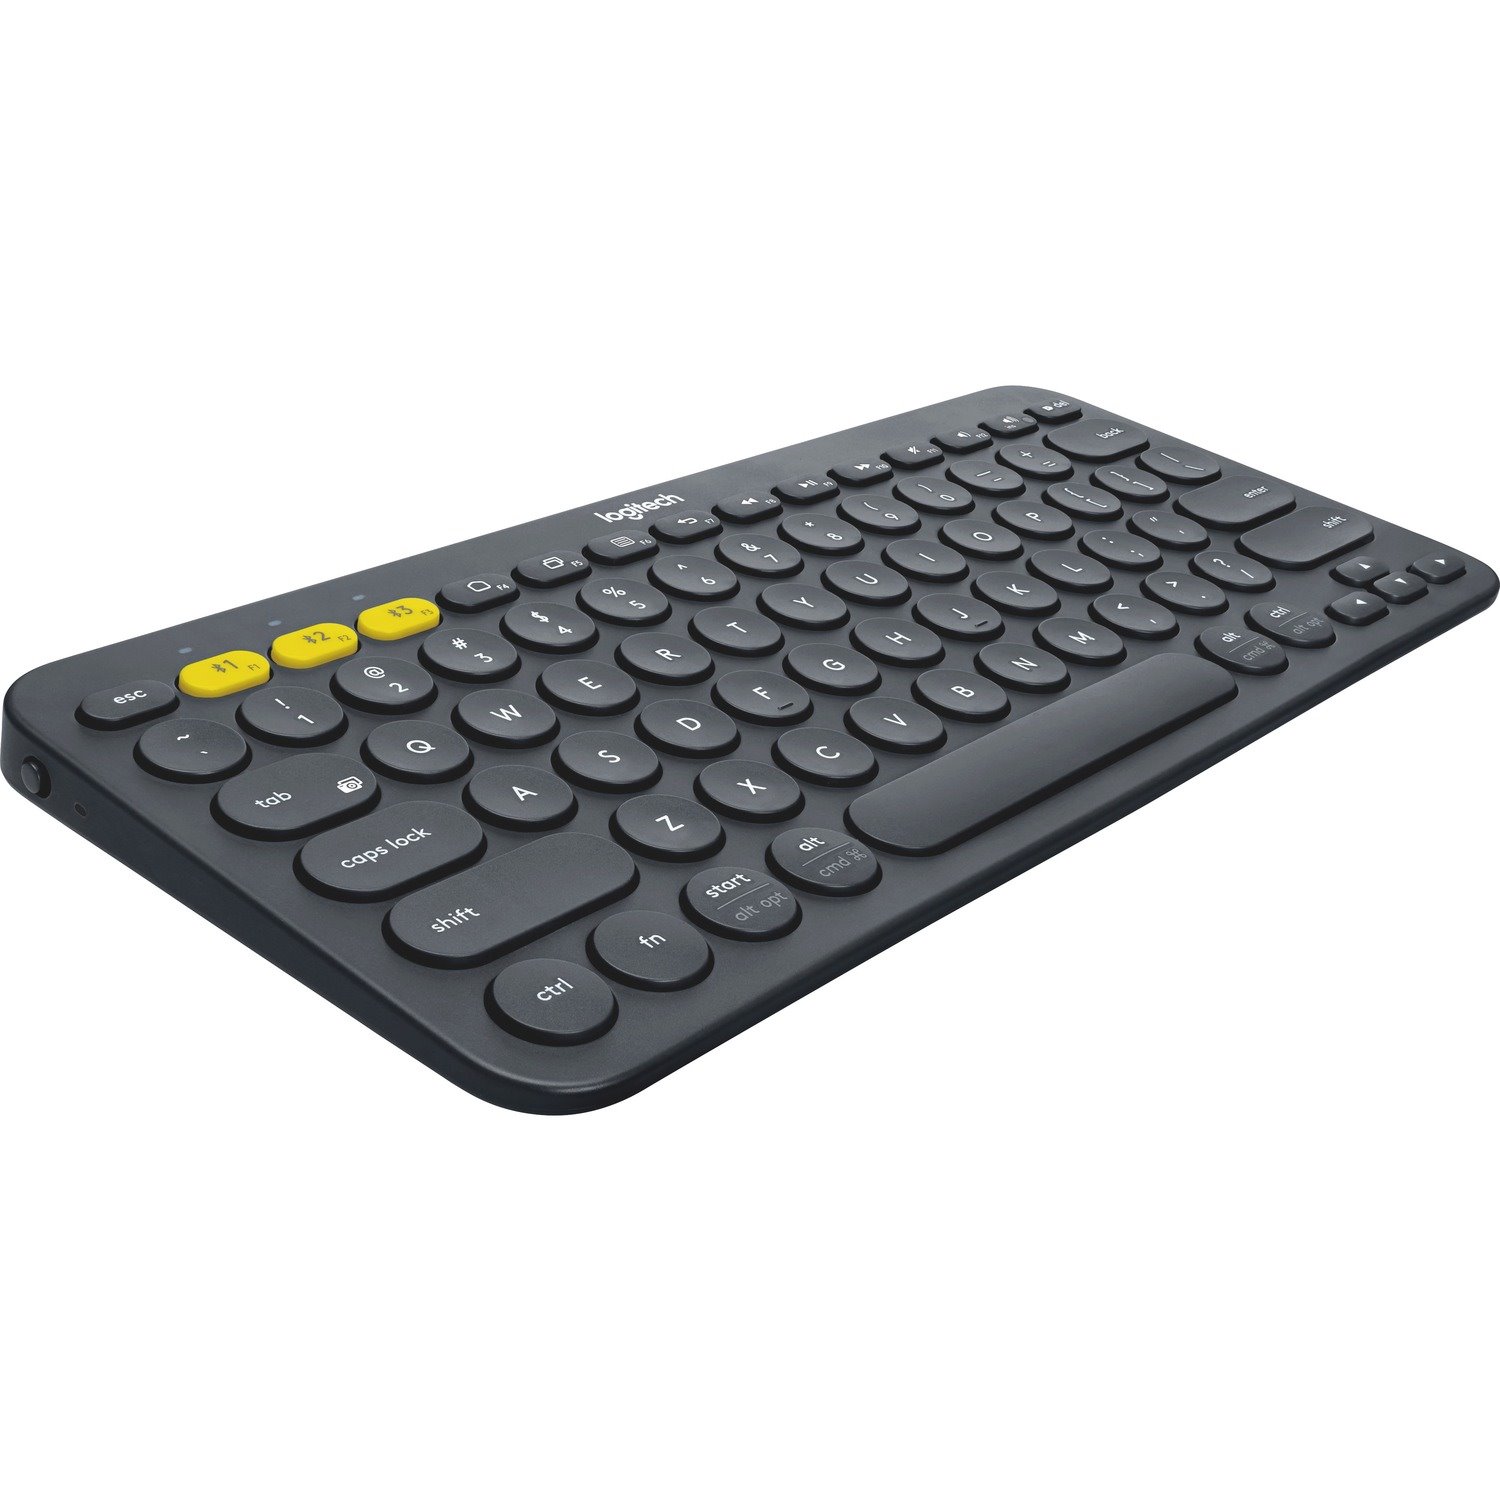 Logitech K380 Keyboard - Wireless Connectivity - QWERTY Layout - Black